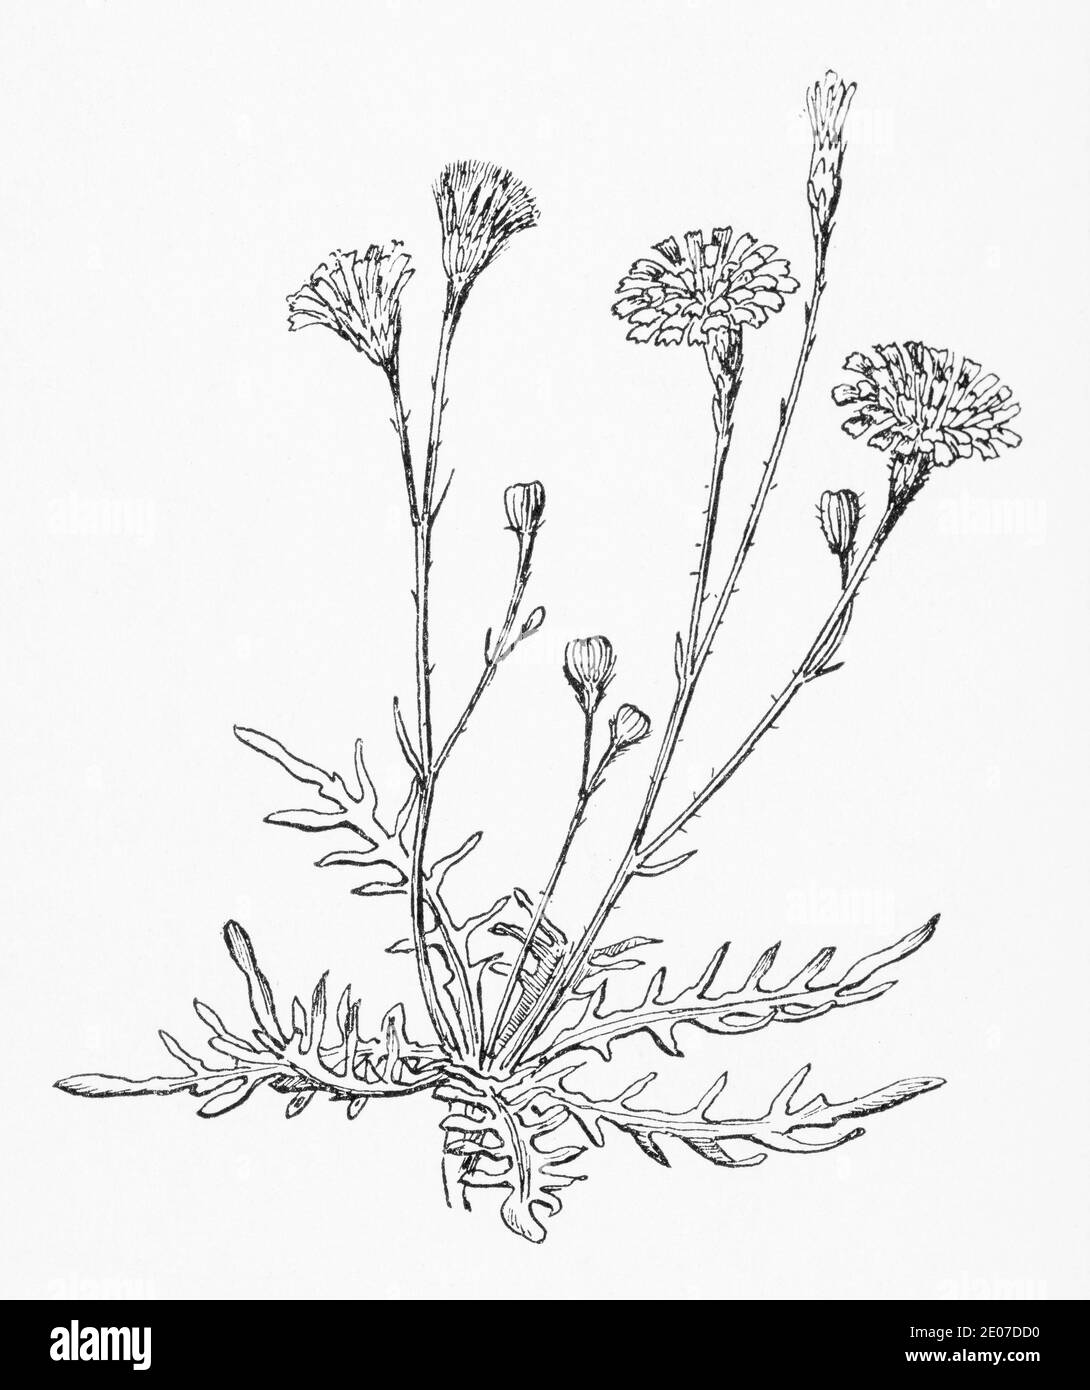 Old botanical illustration engraving of Autumn Hawkbit / Scorzoneroides autumnalis, Leontodon autumnalis. Traditional herbal plant. See Notes Stock Photo